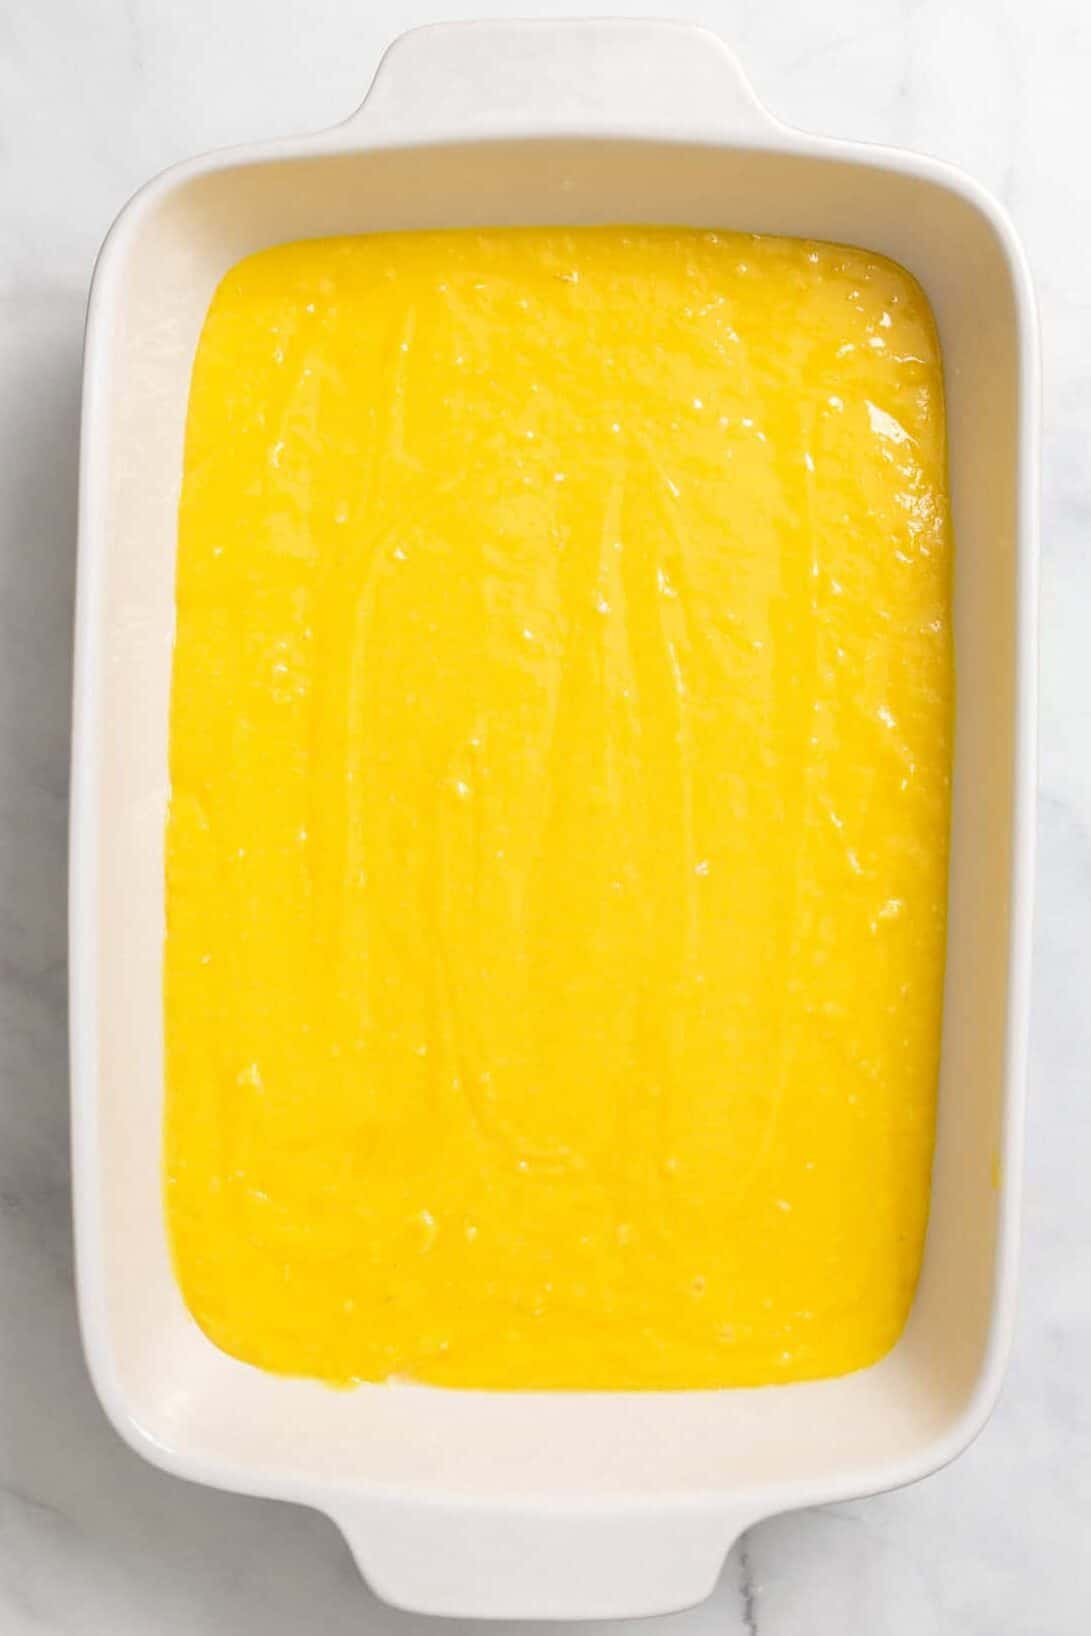 Image of a 9 x 13" casserole baking dish with lemon cake batter.